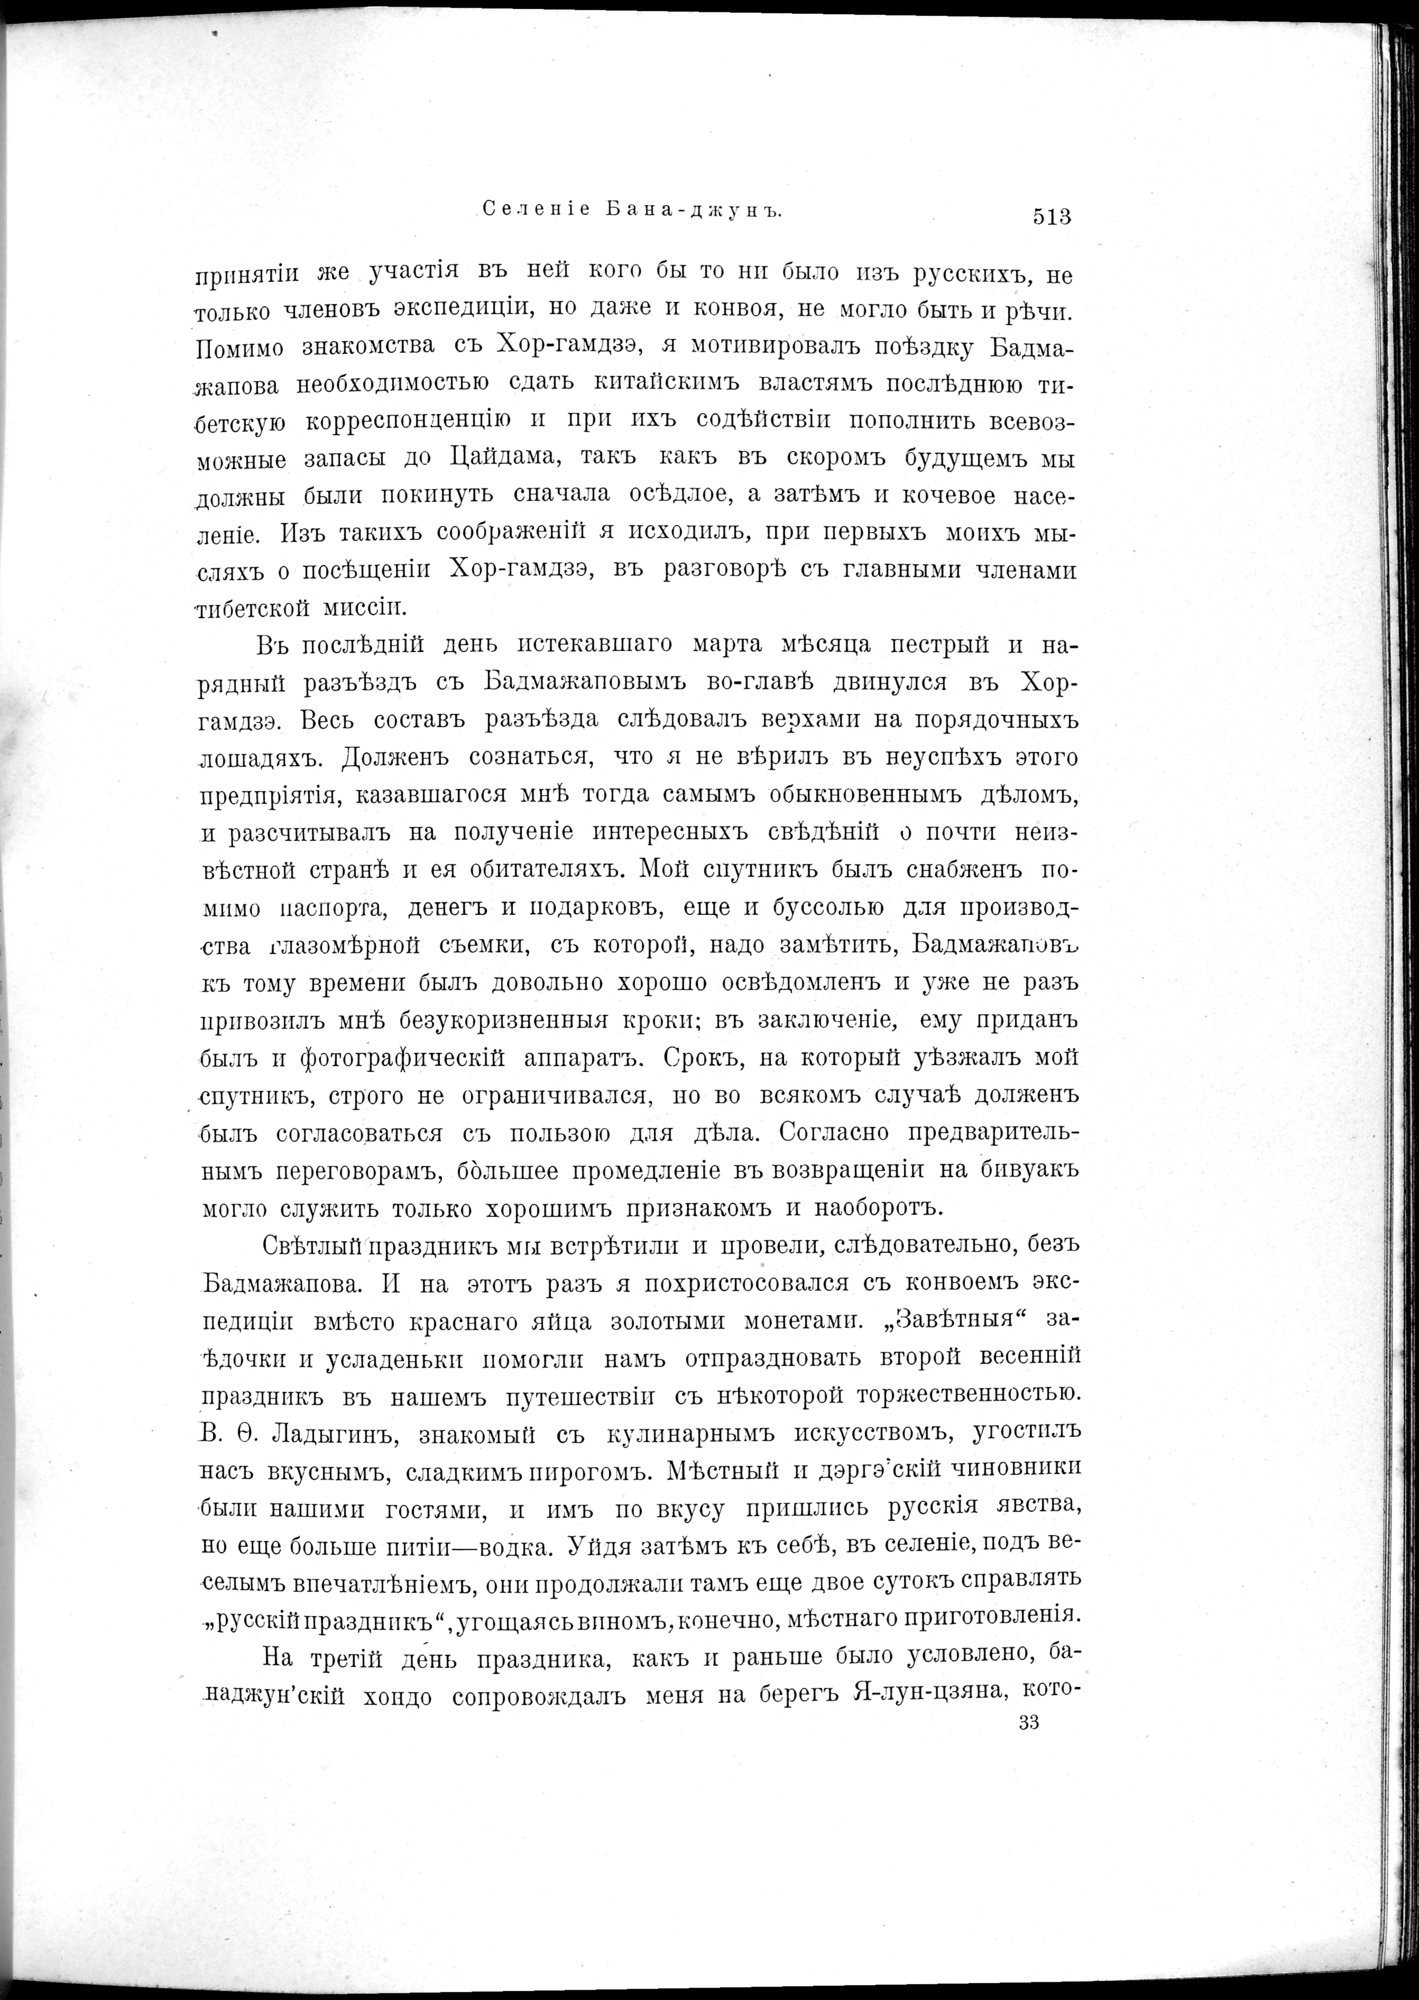 Mongoliia i Kam : vol.2 / Page 331 (Grayscale High Resolution Image)